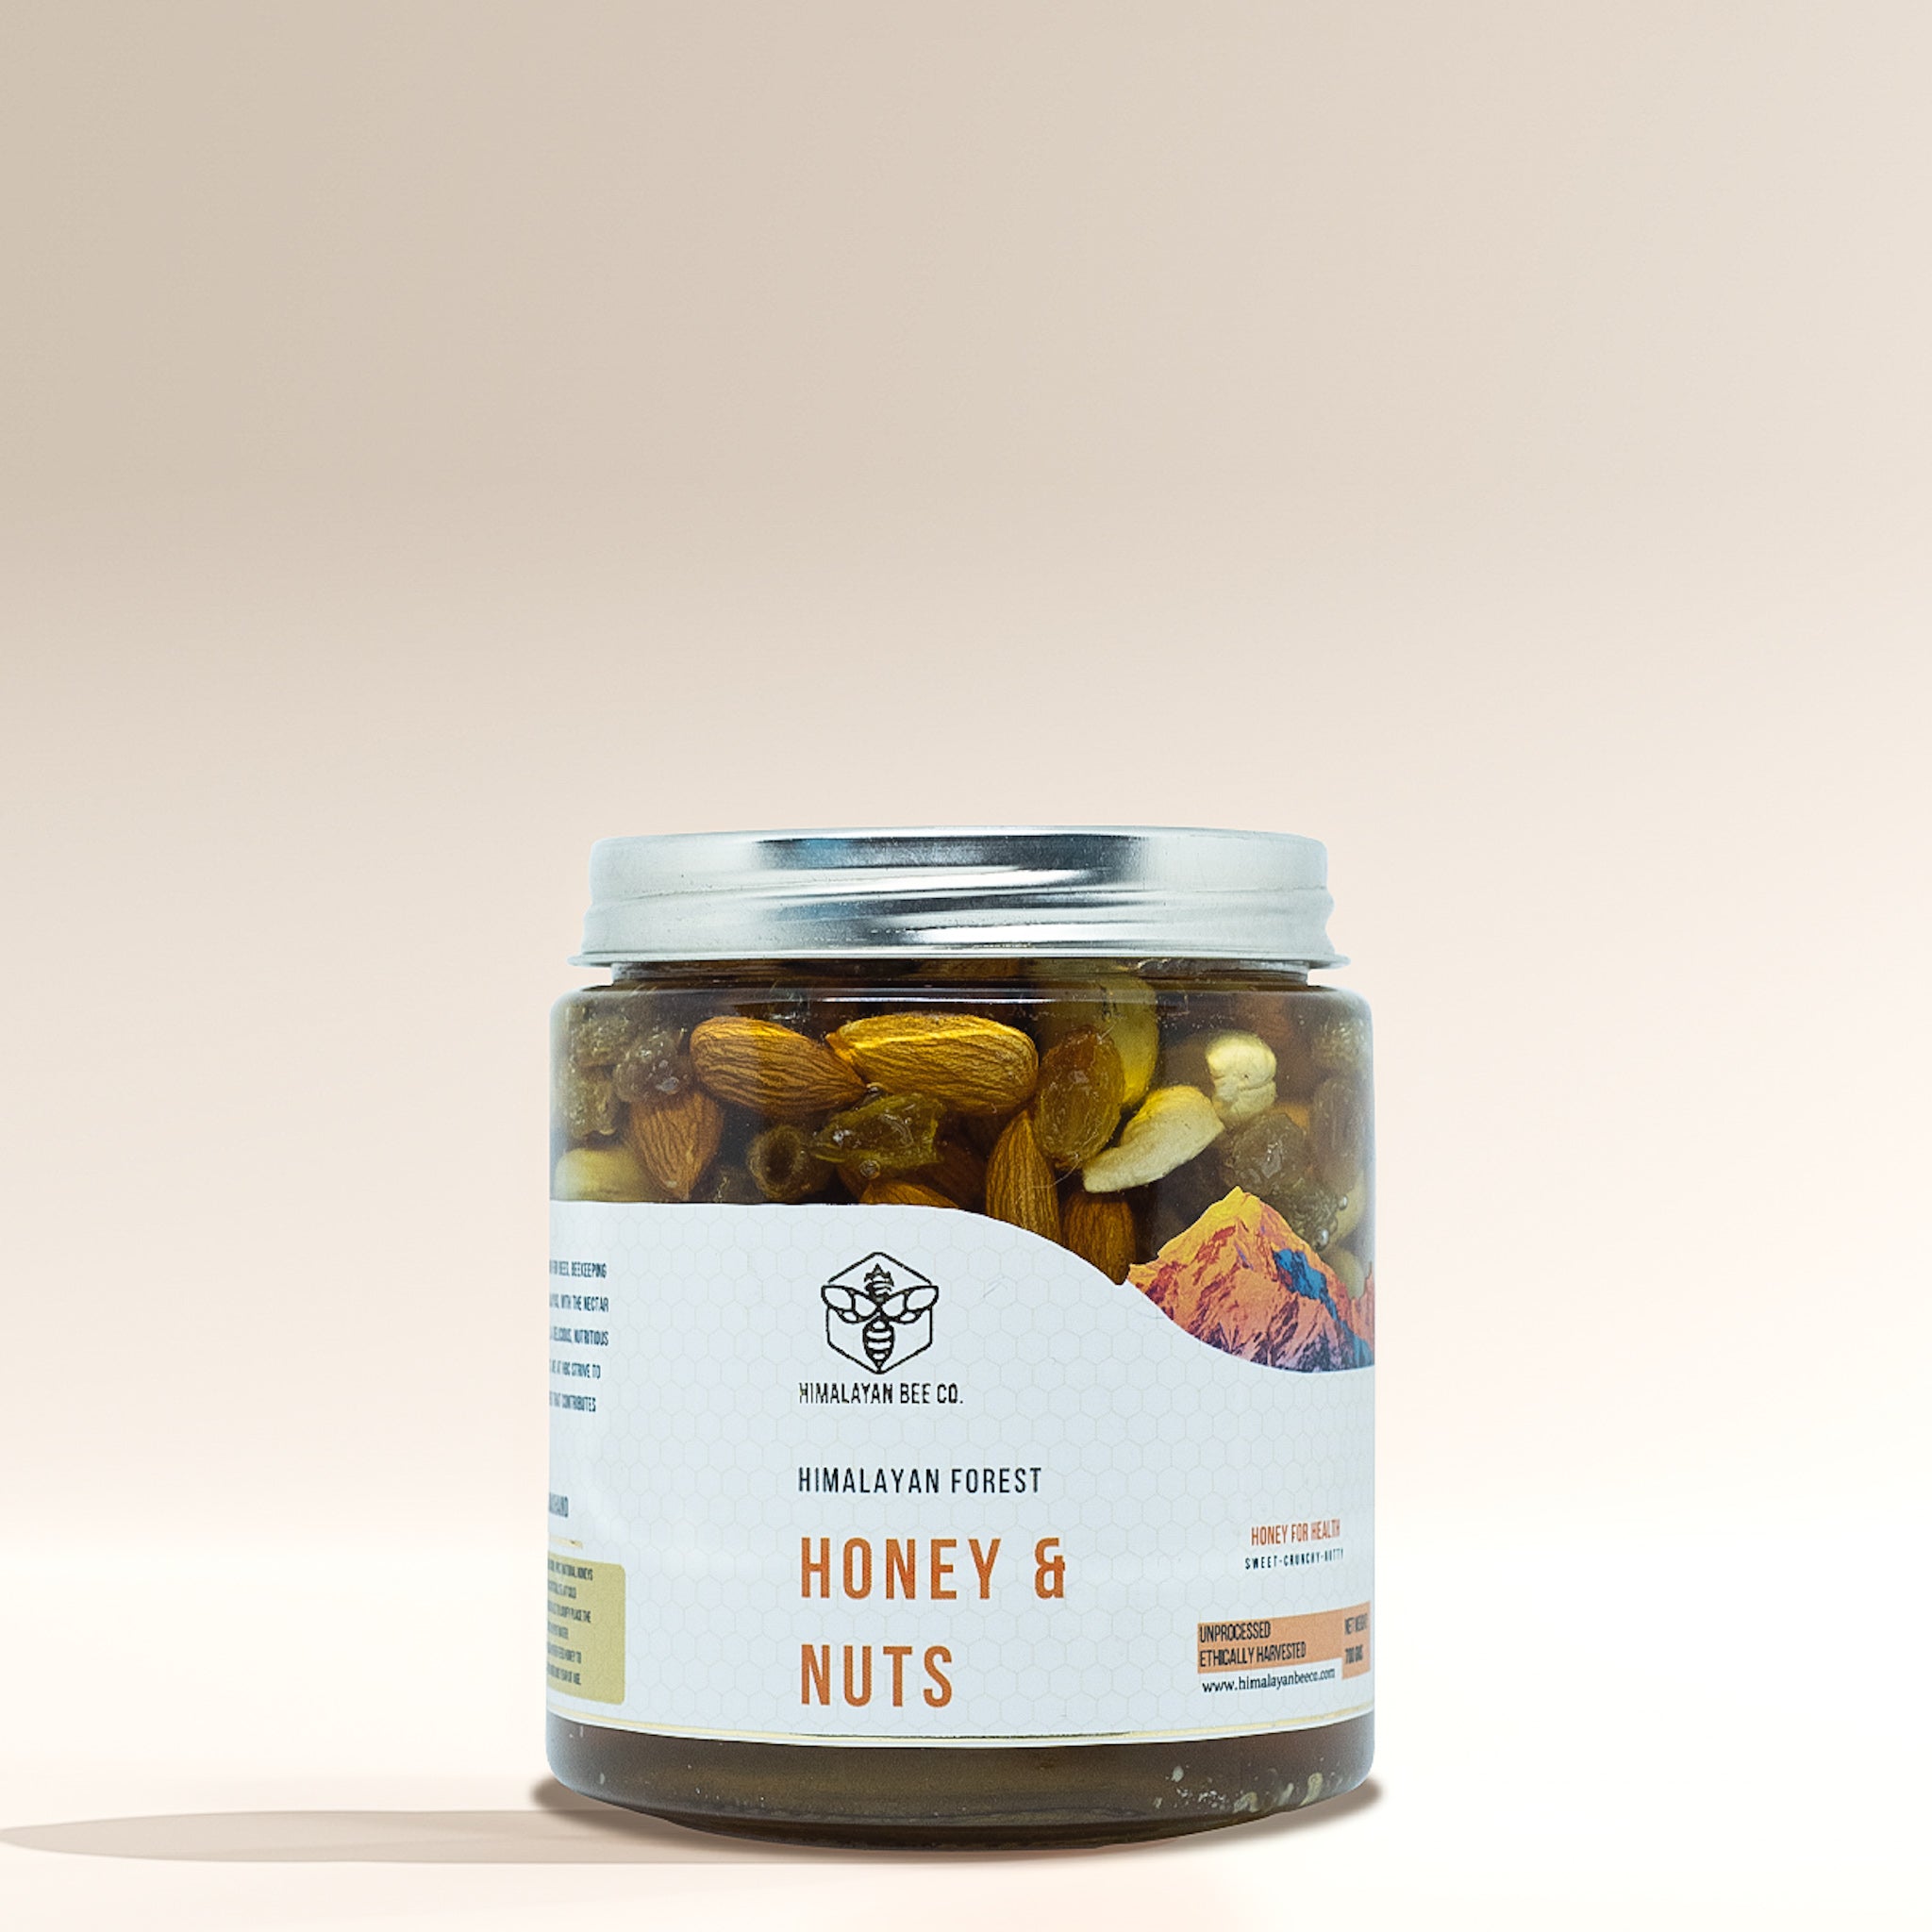 Honey Nuts Natural Nuts in Honey Jar Walnut Hazelnut Peanut Pistachio  Almond By Aksu Vital Natural Herbal Products